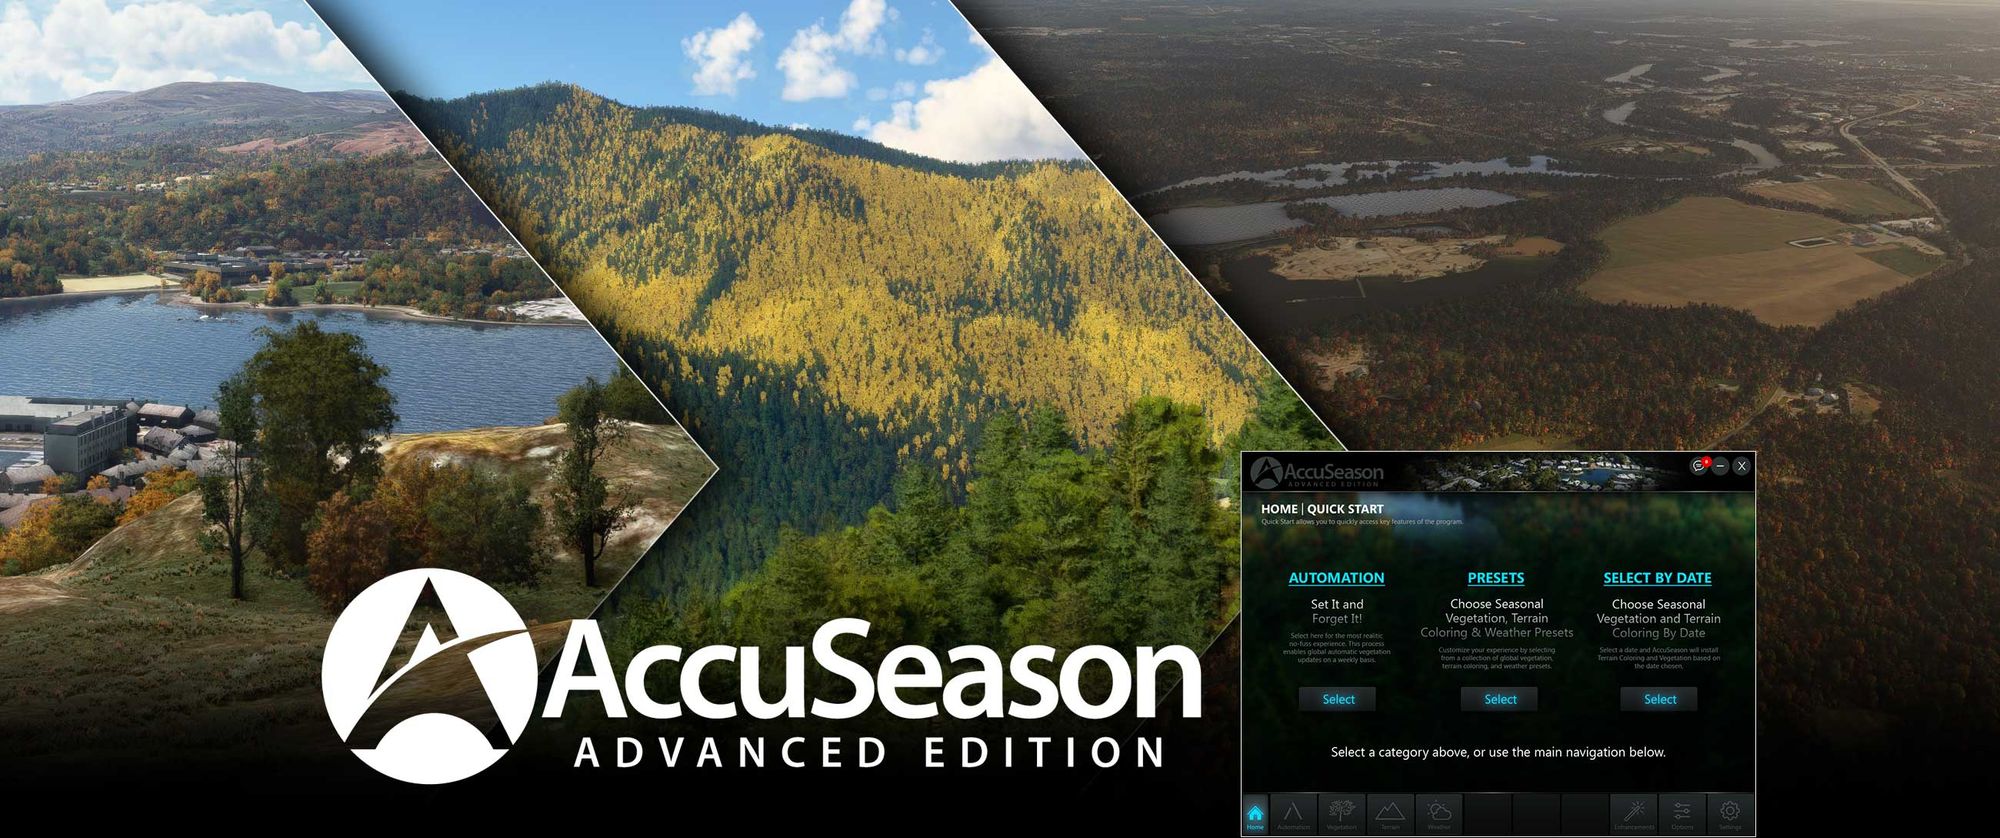 REX AccuSeason Advanced Edition now available